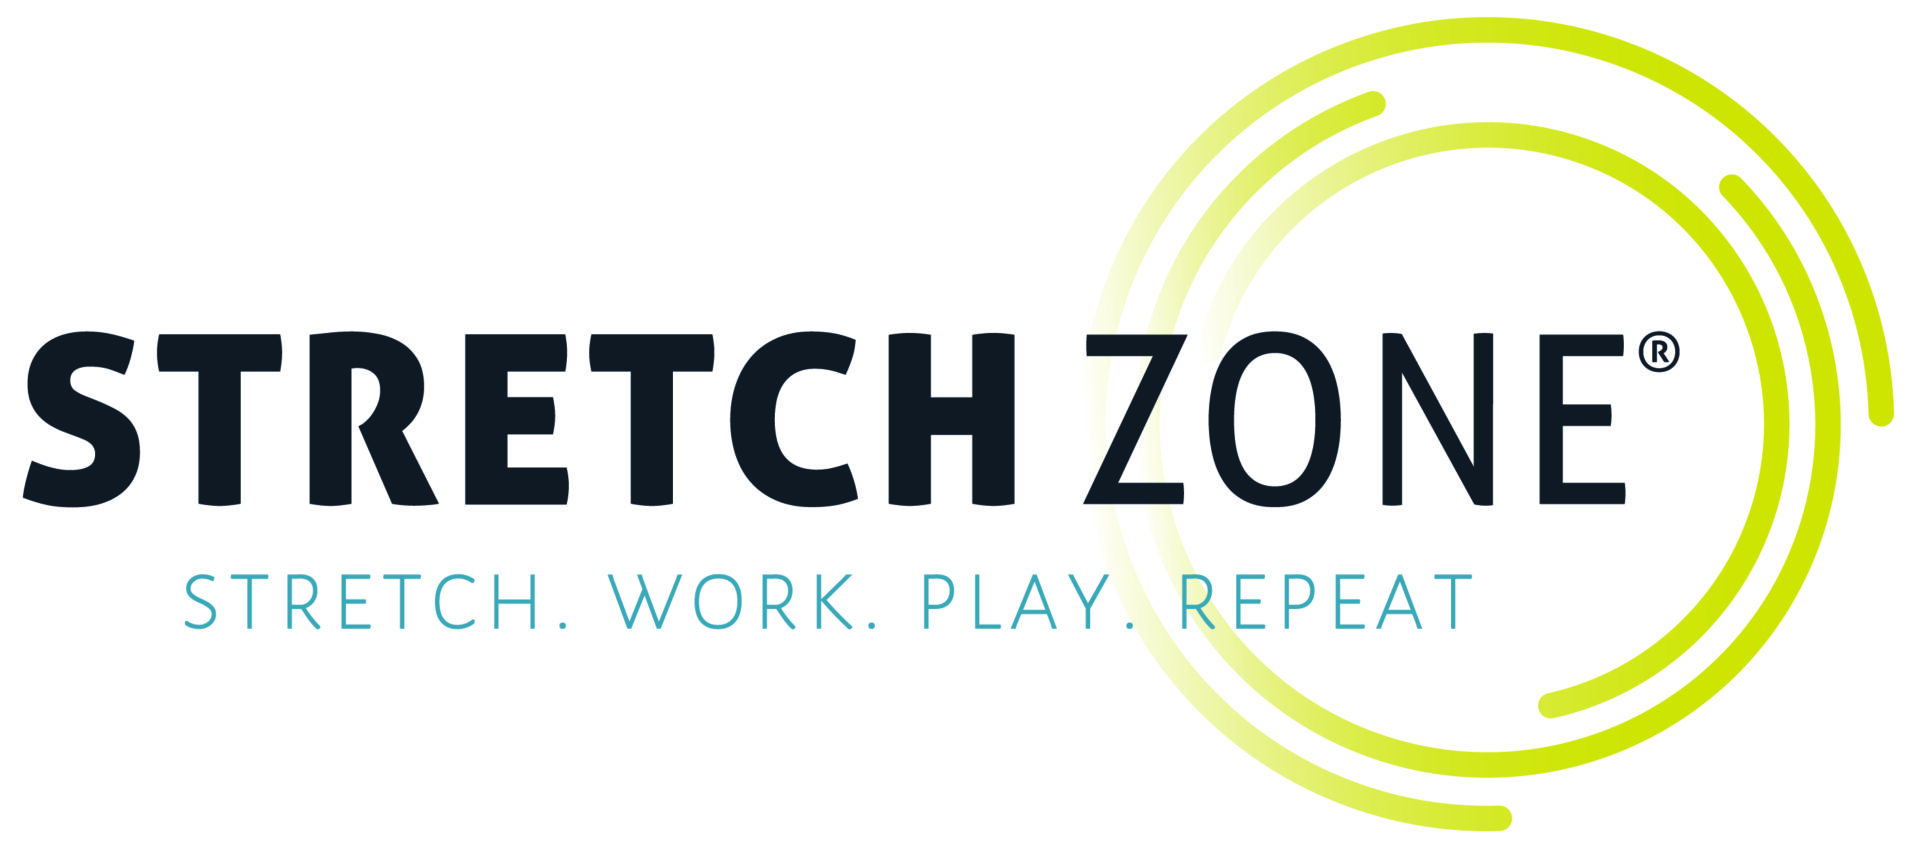 https://respondersfirstfoundation.org/wp-content/uploads/2022/04/Stretch_Zone-Logo-CMYK-FullColor-scaled.jpg